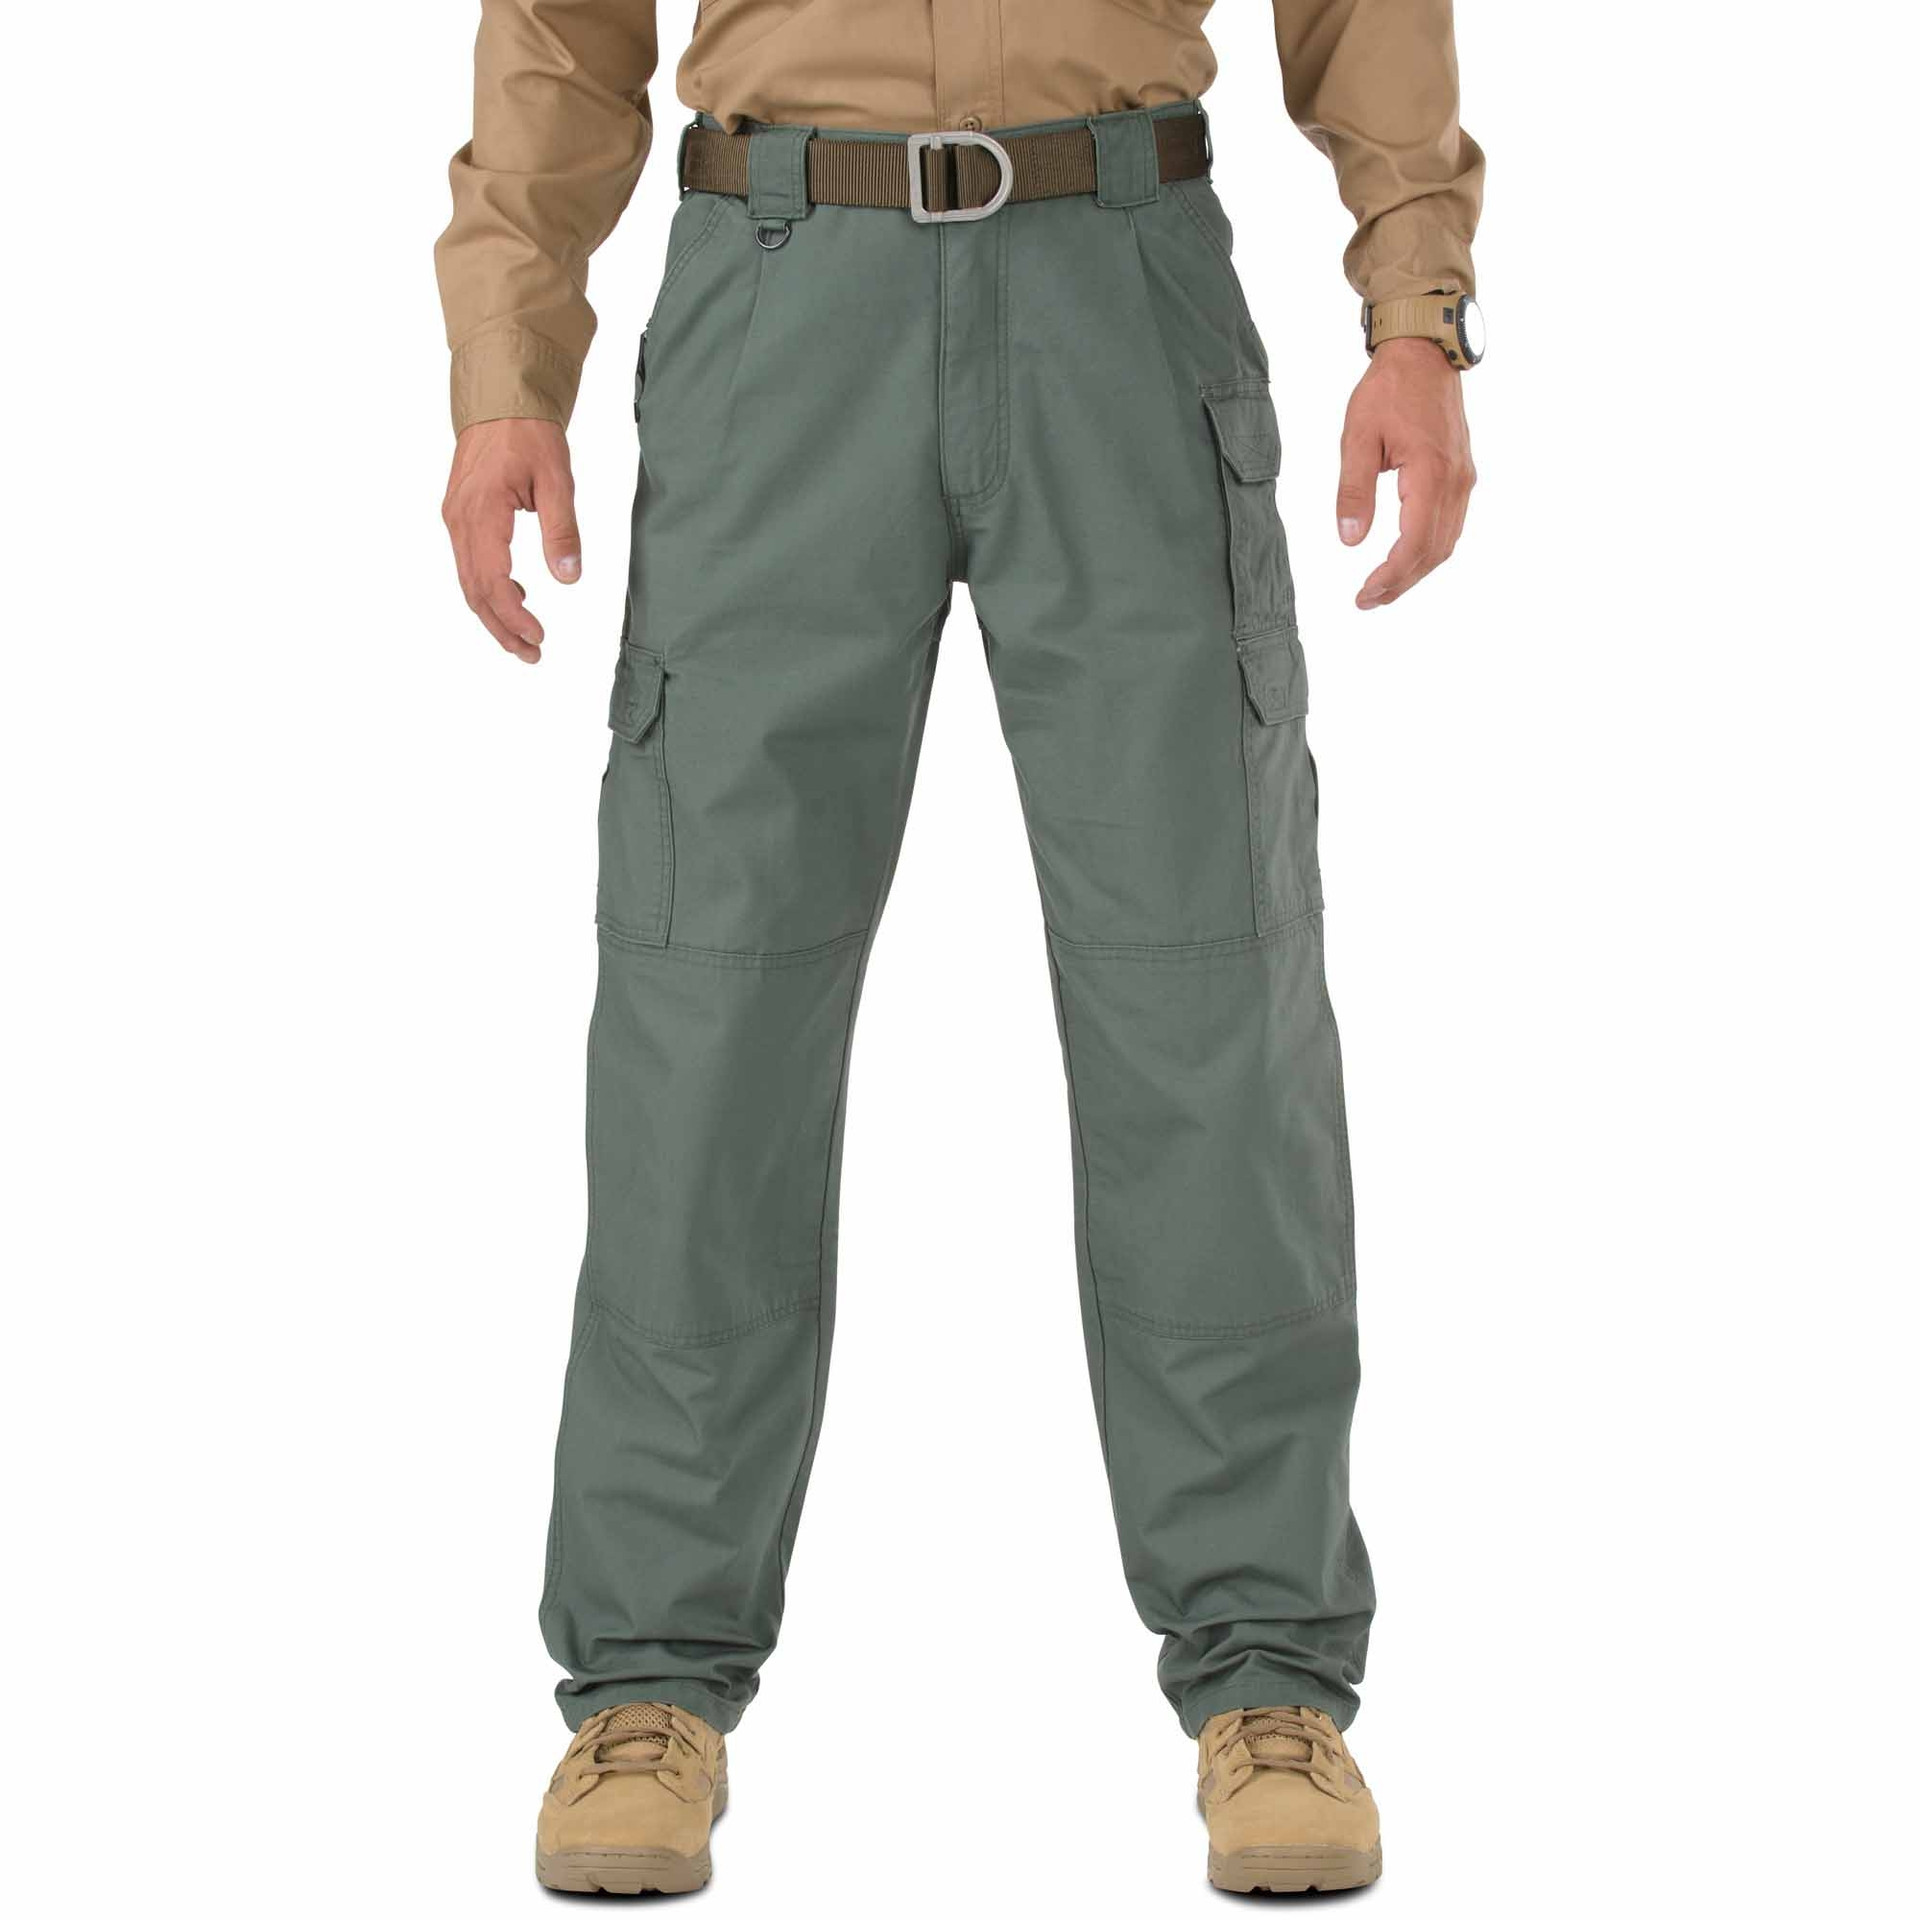 5.11 Tactical 74251 Cotton Canvas Pant - Atlantic Tactical Inc